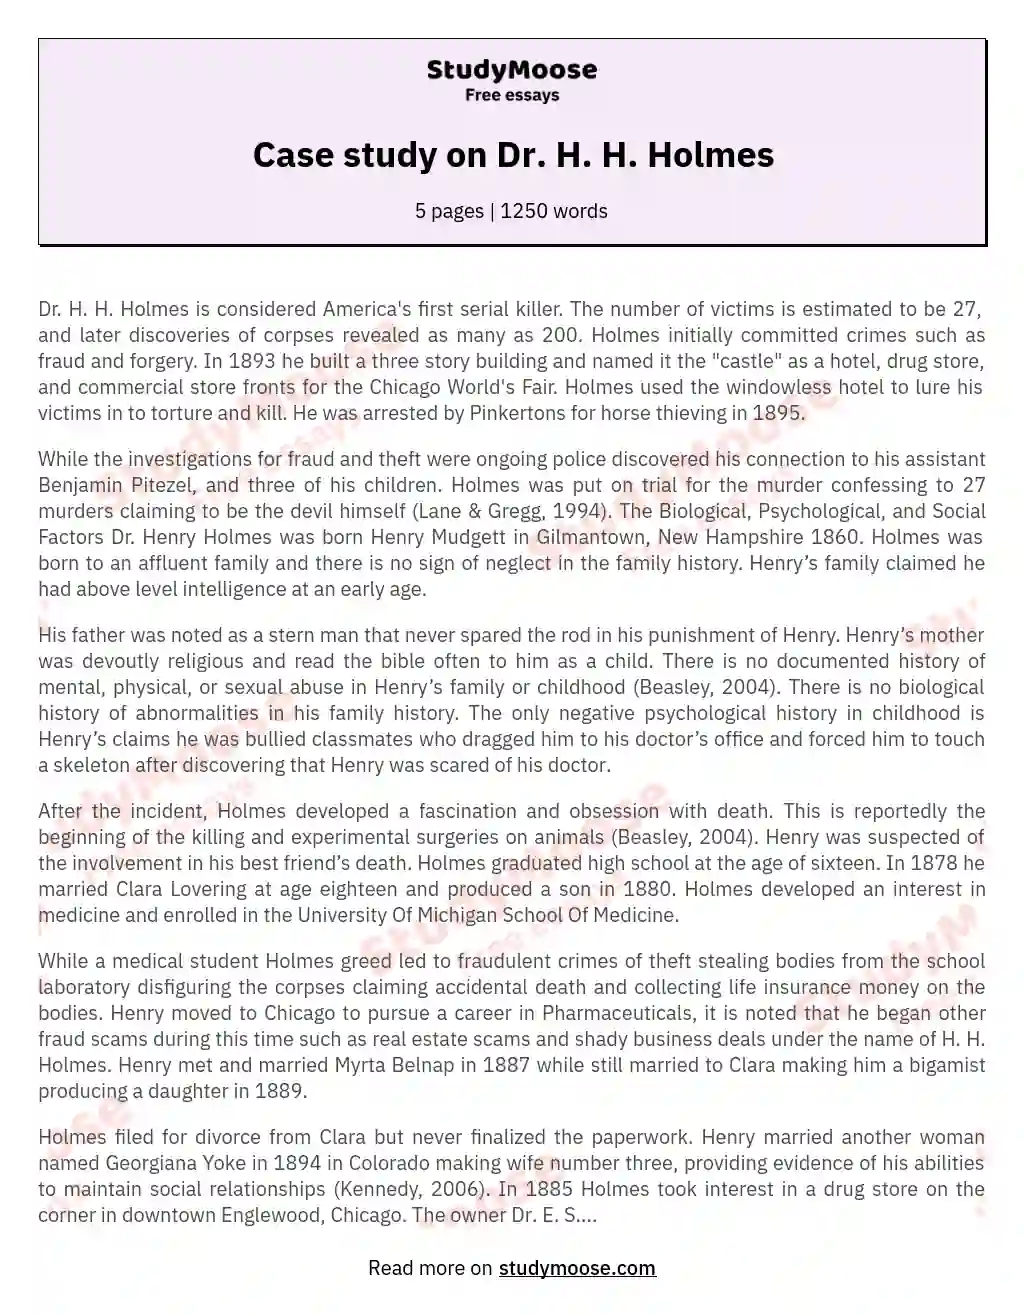 Case study on Dr. H. H. Holmes essay